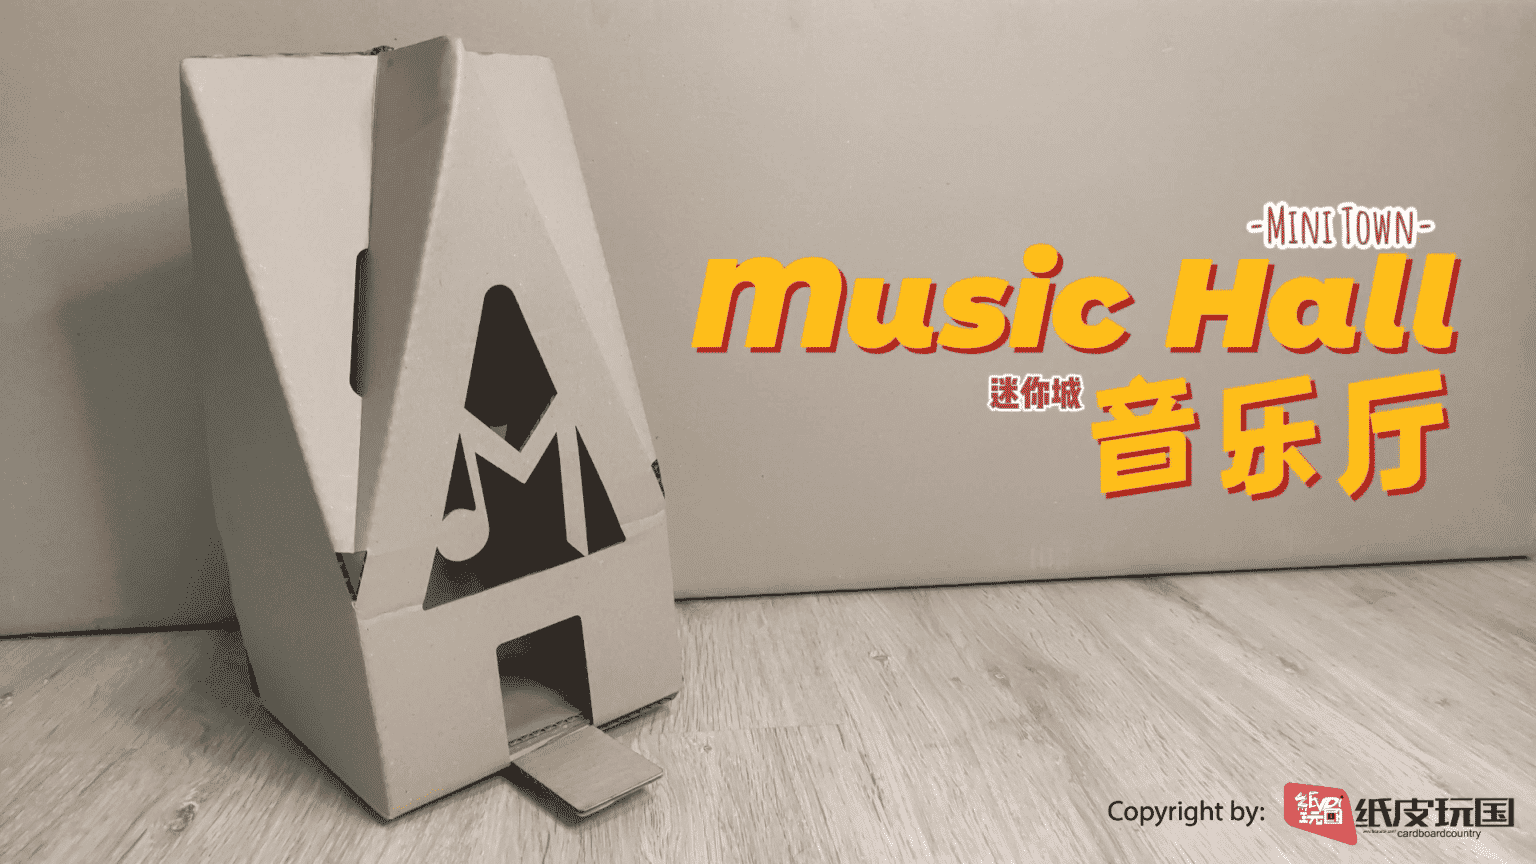 (215) Mini Town_Music Hall 迷你城_音乐厅 - YouTube